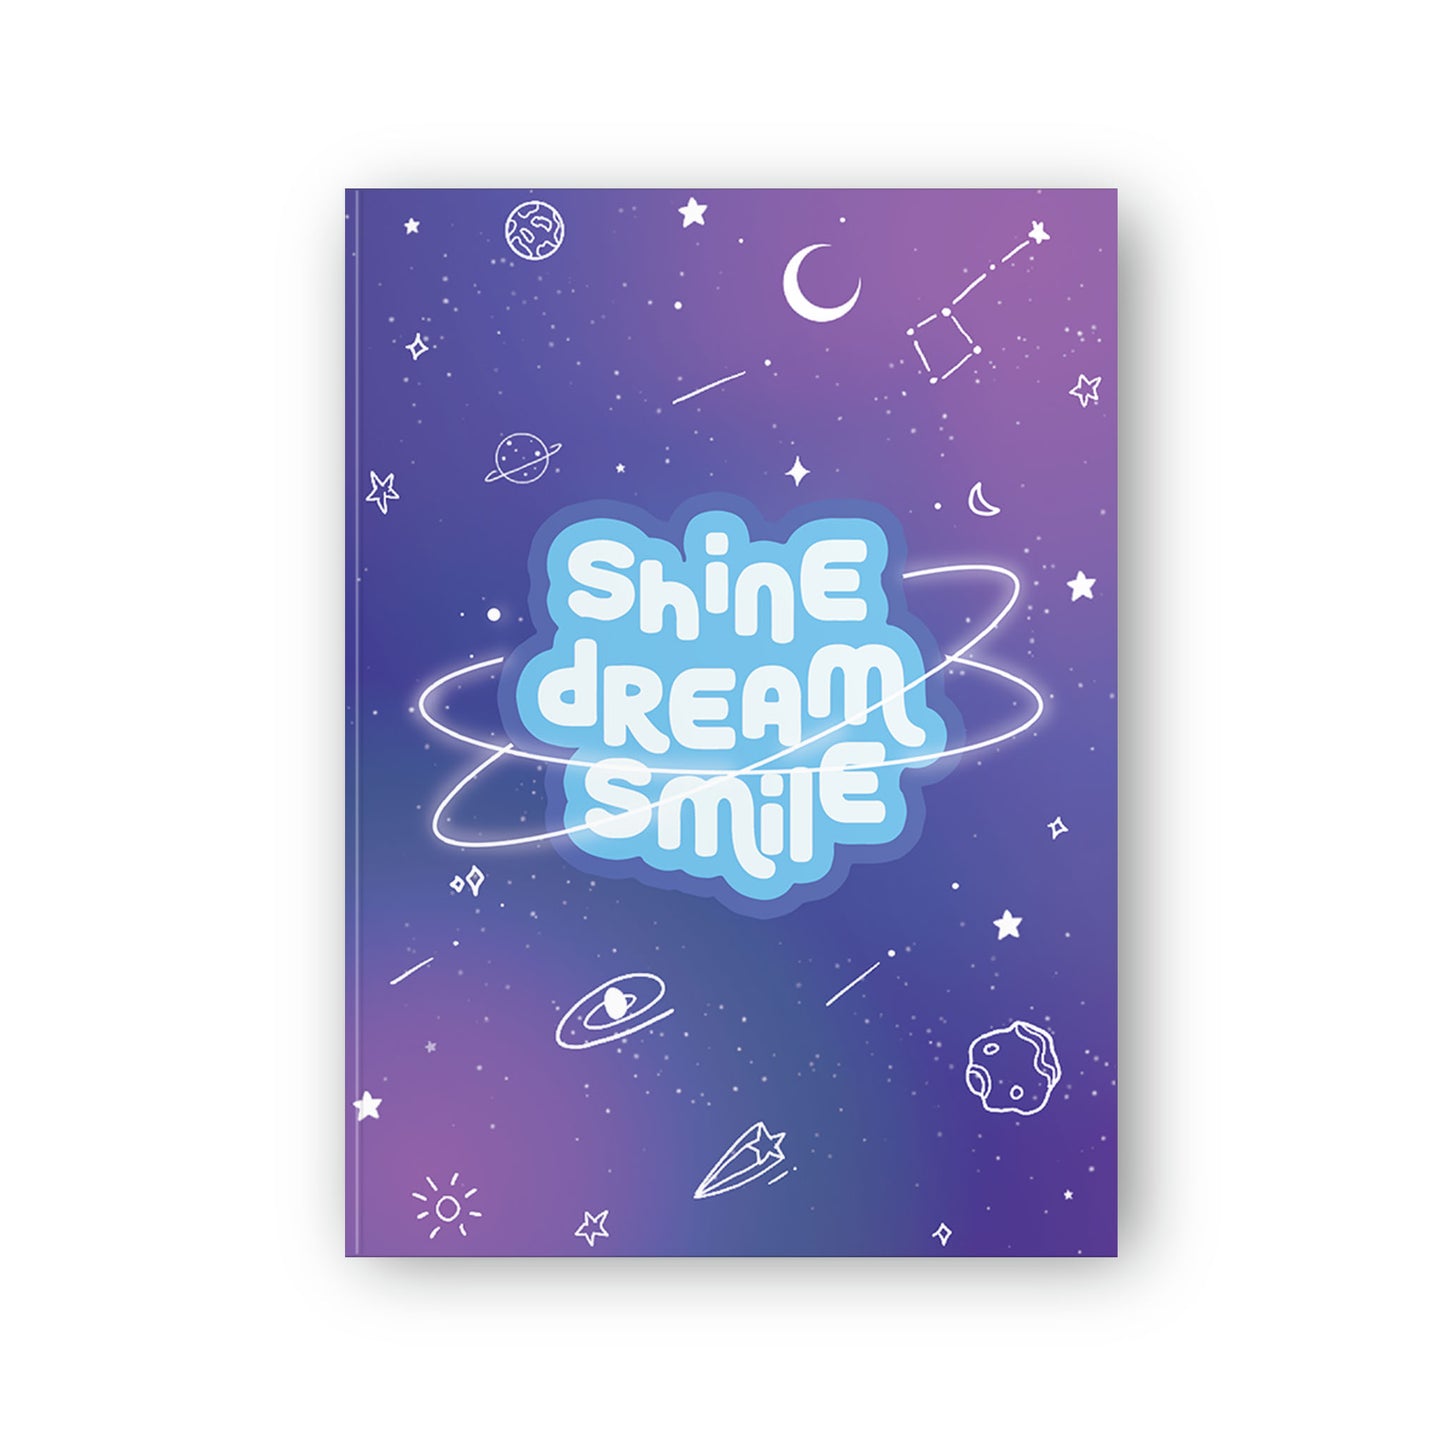 BTS Shine Dream Smile Notebook